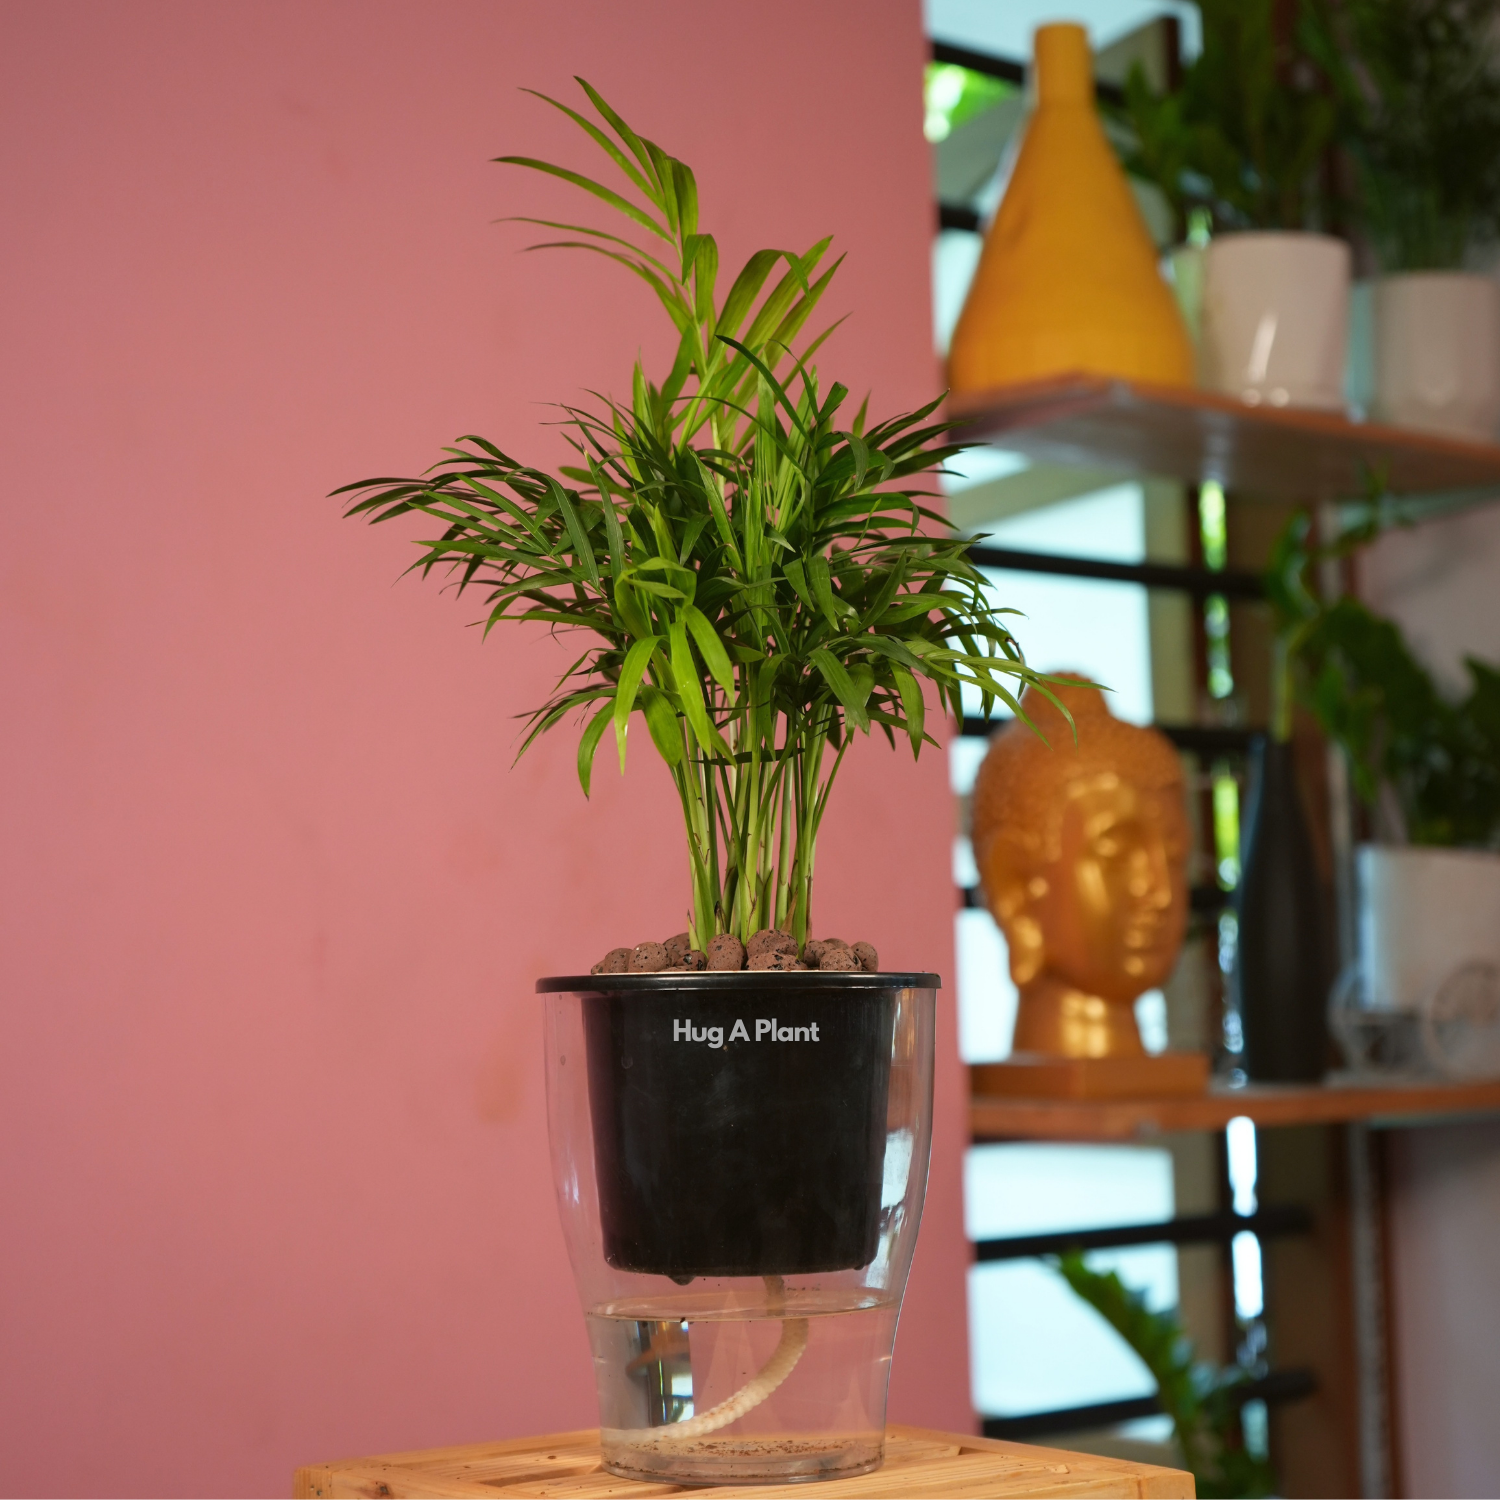 Chamaedorea Palm (Chamaedorea seifrizii) - Live Plant (With 5 Inch Self-Watering Pot & Plant)